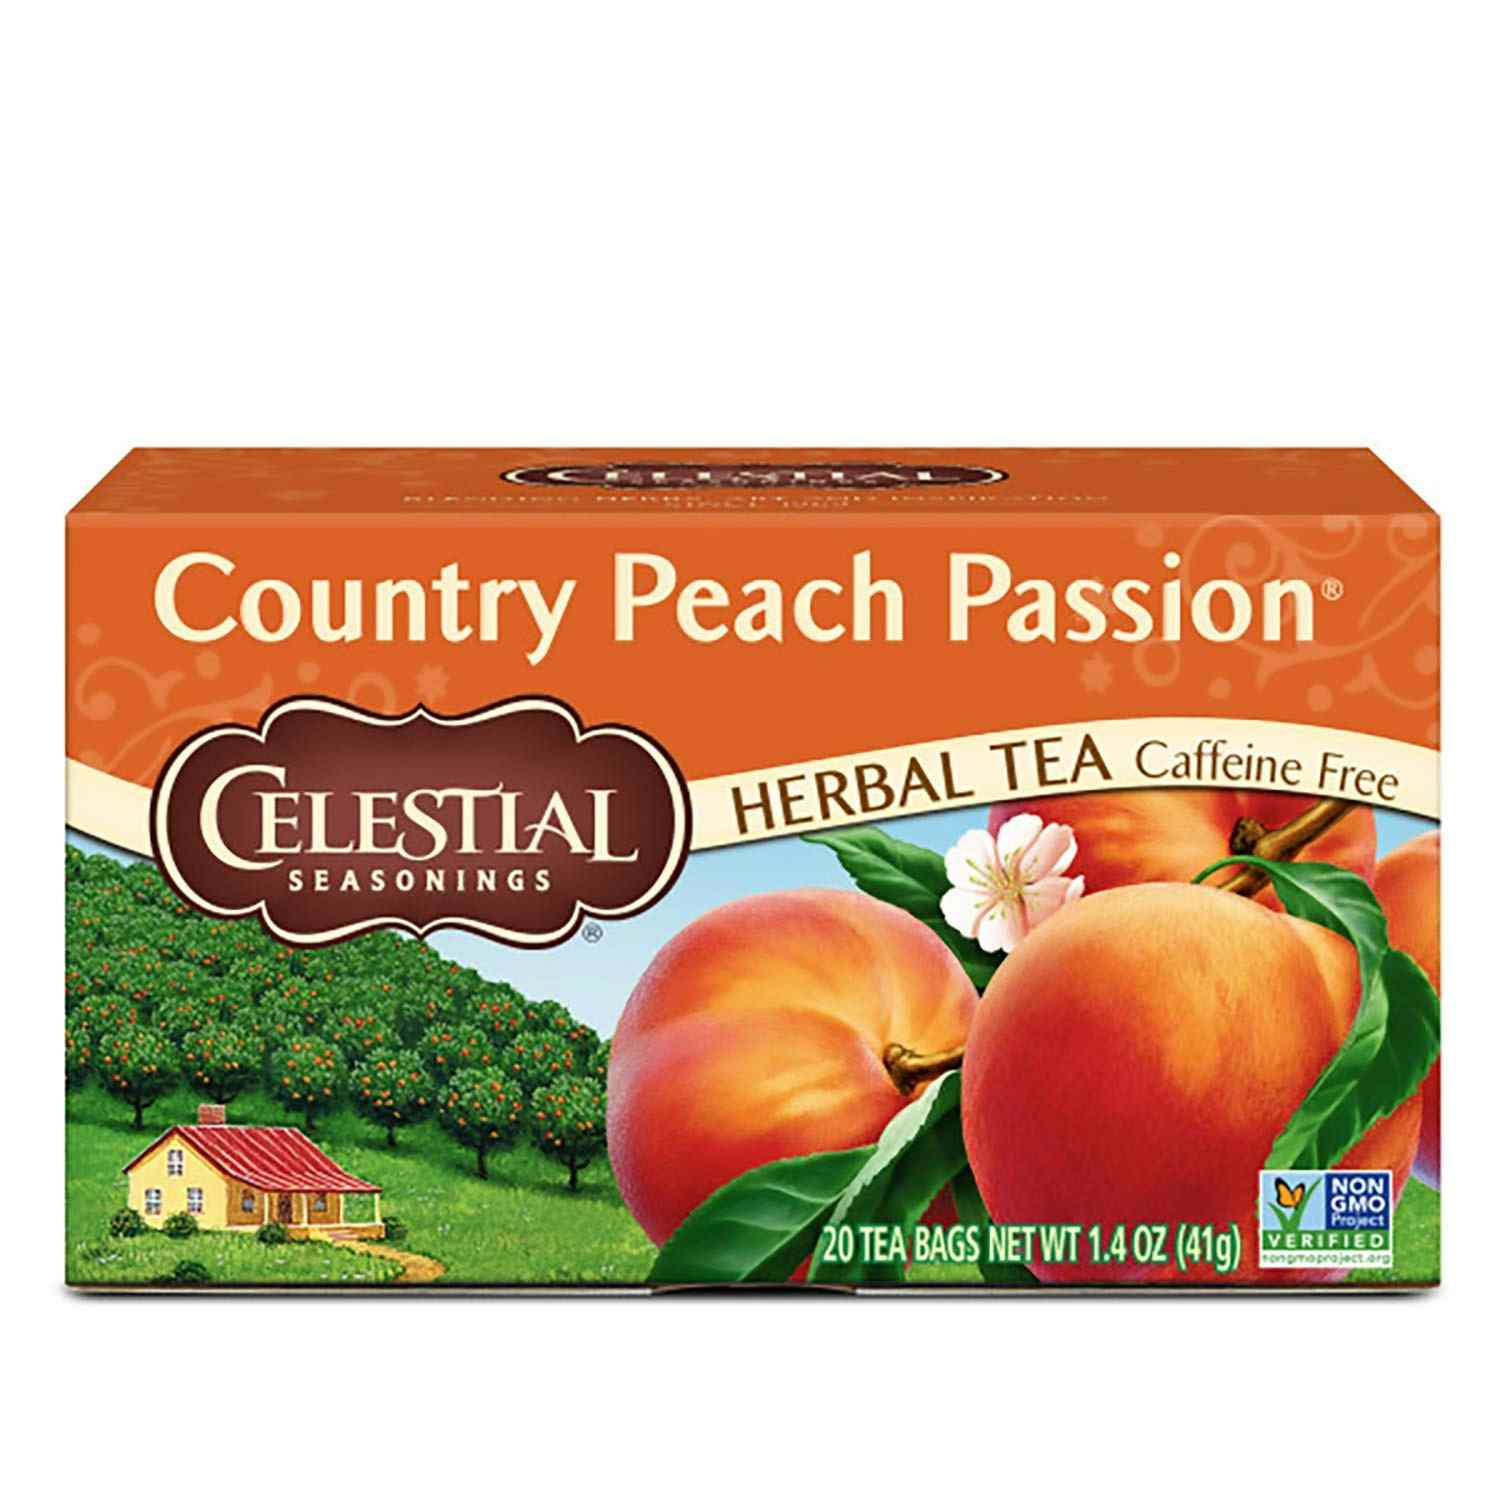 Celestial Seasonings Country Peach Passion Herbal Tea